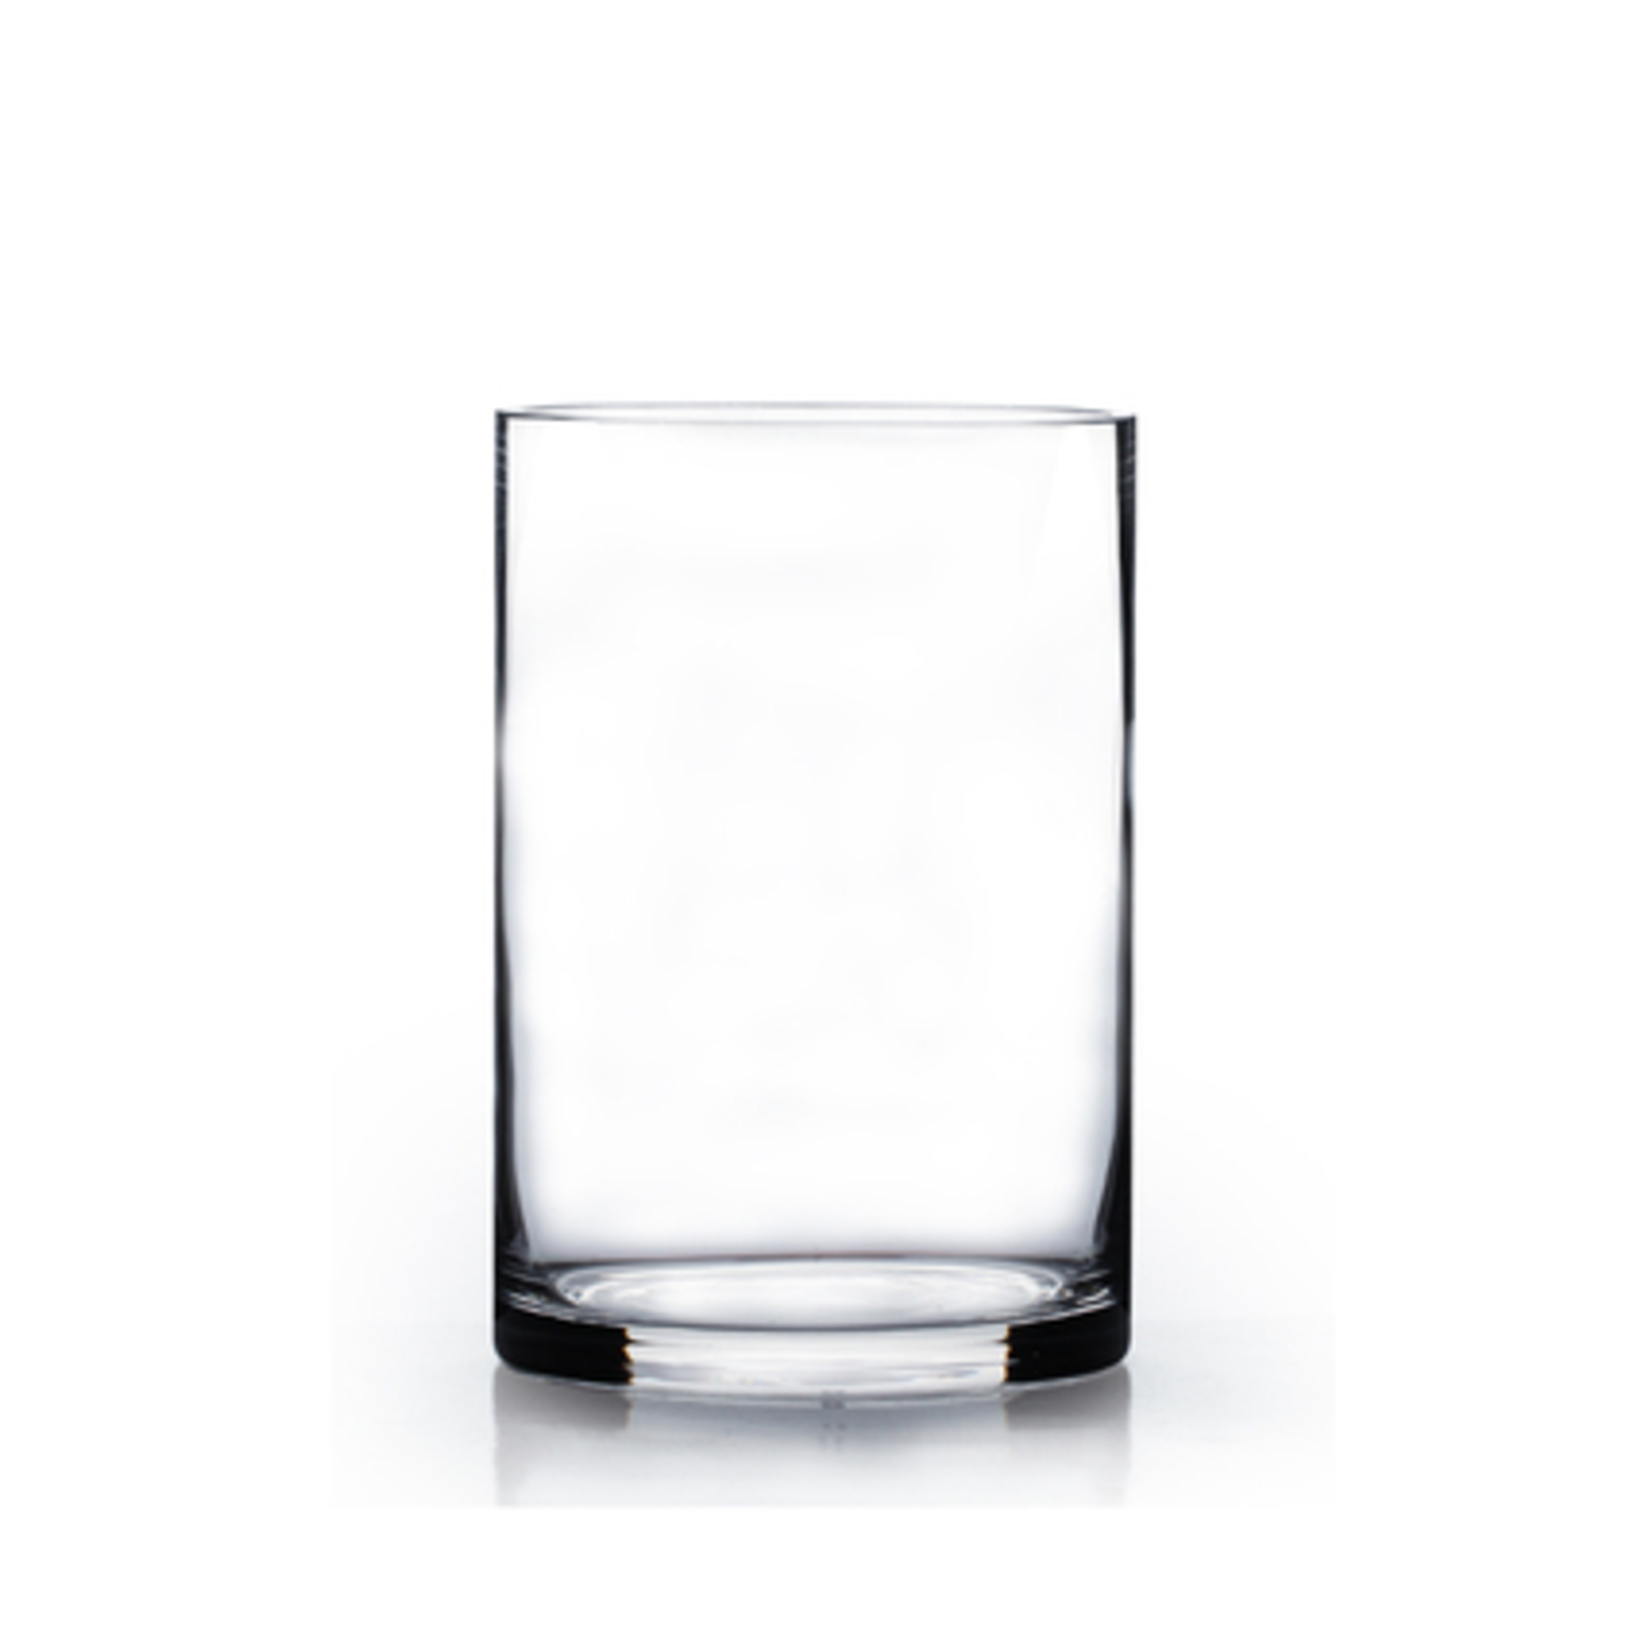 6"H X 4"D CLEAR GLASS CYLINDER VASE